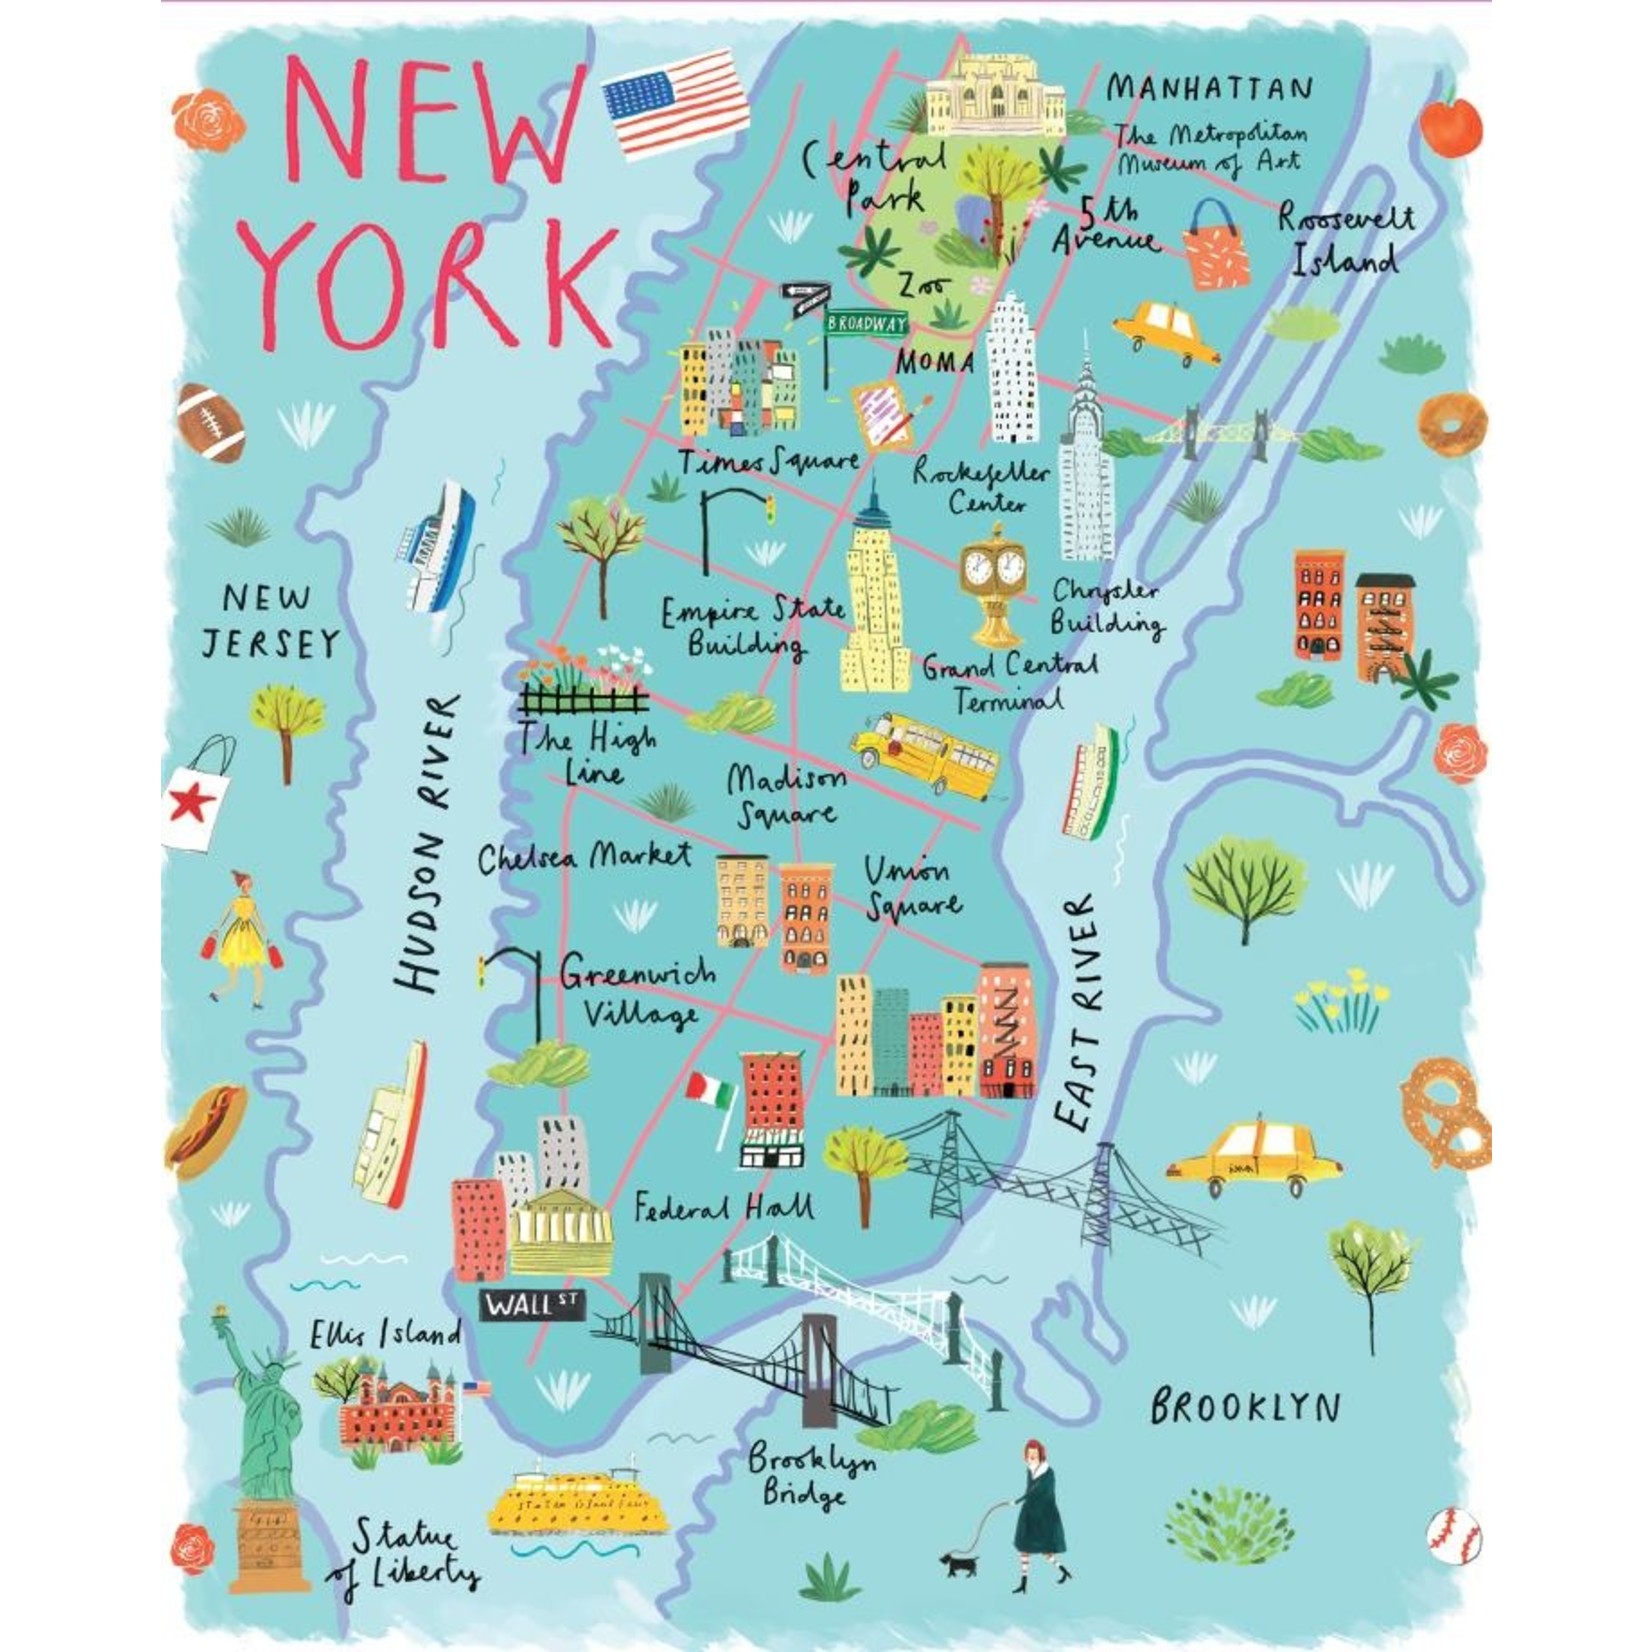 new york, new york on map